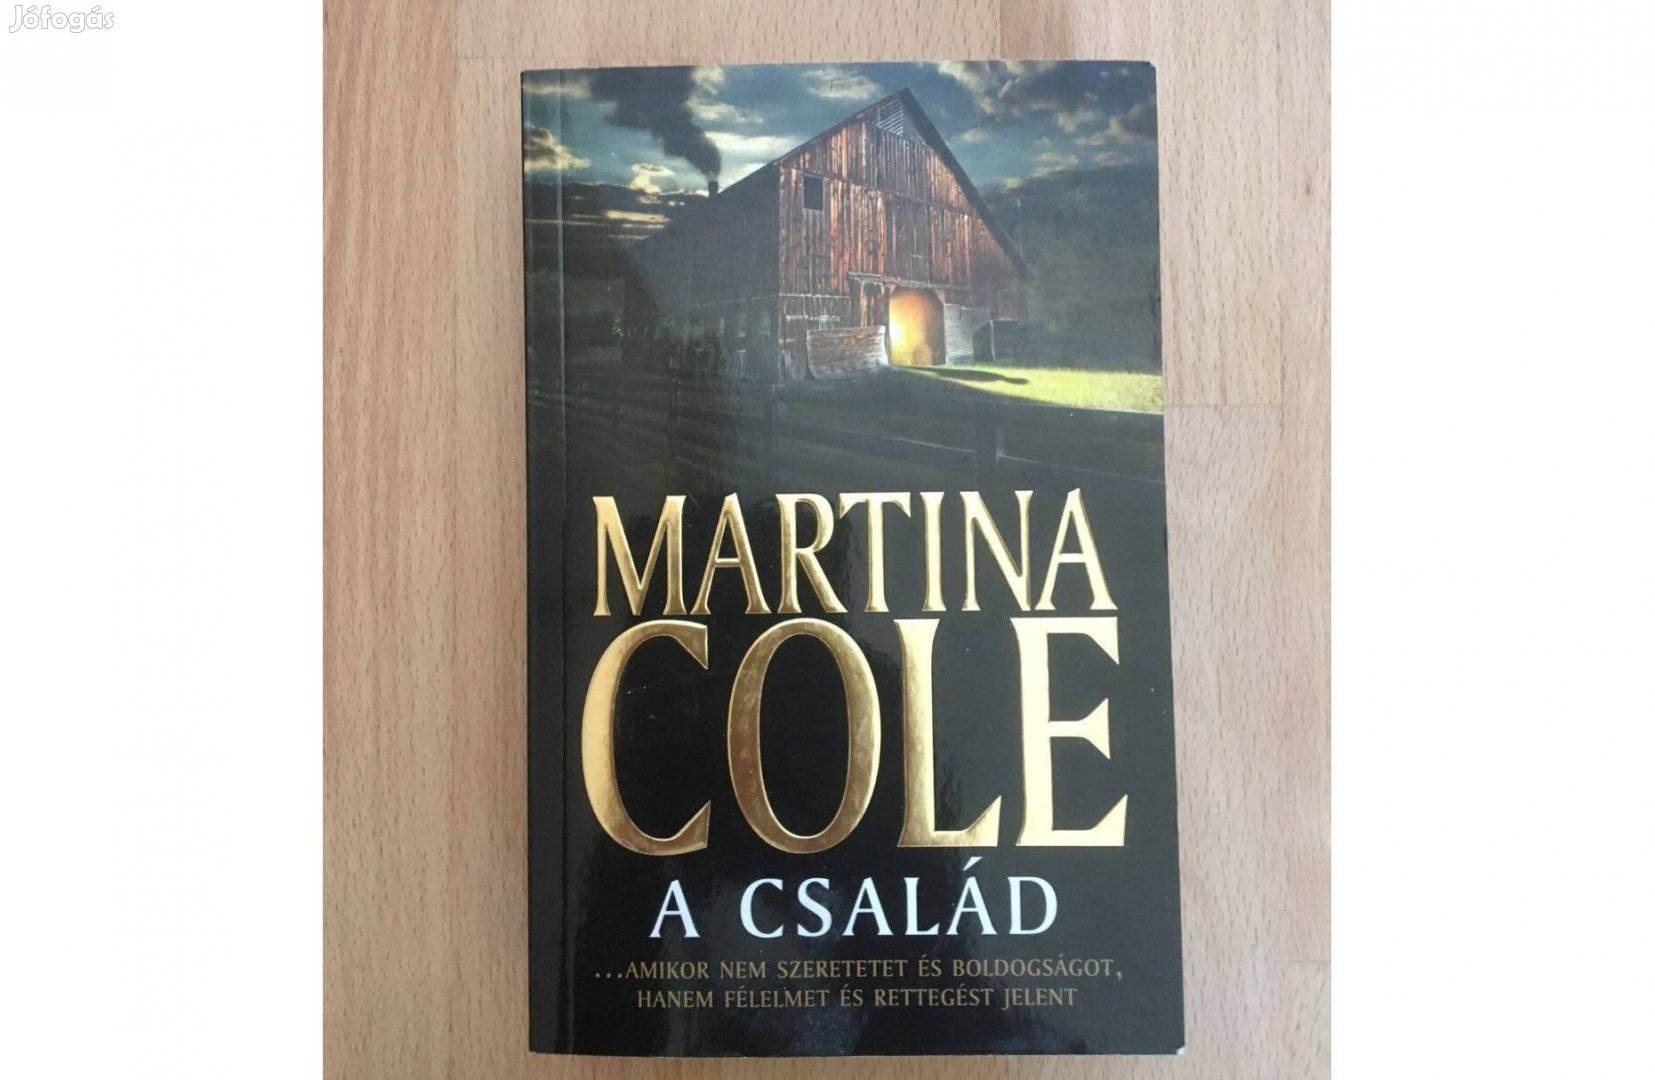 Martina Cole: A család c. könyv